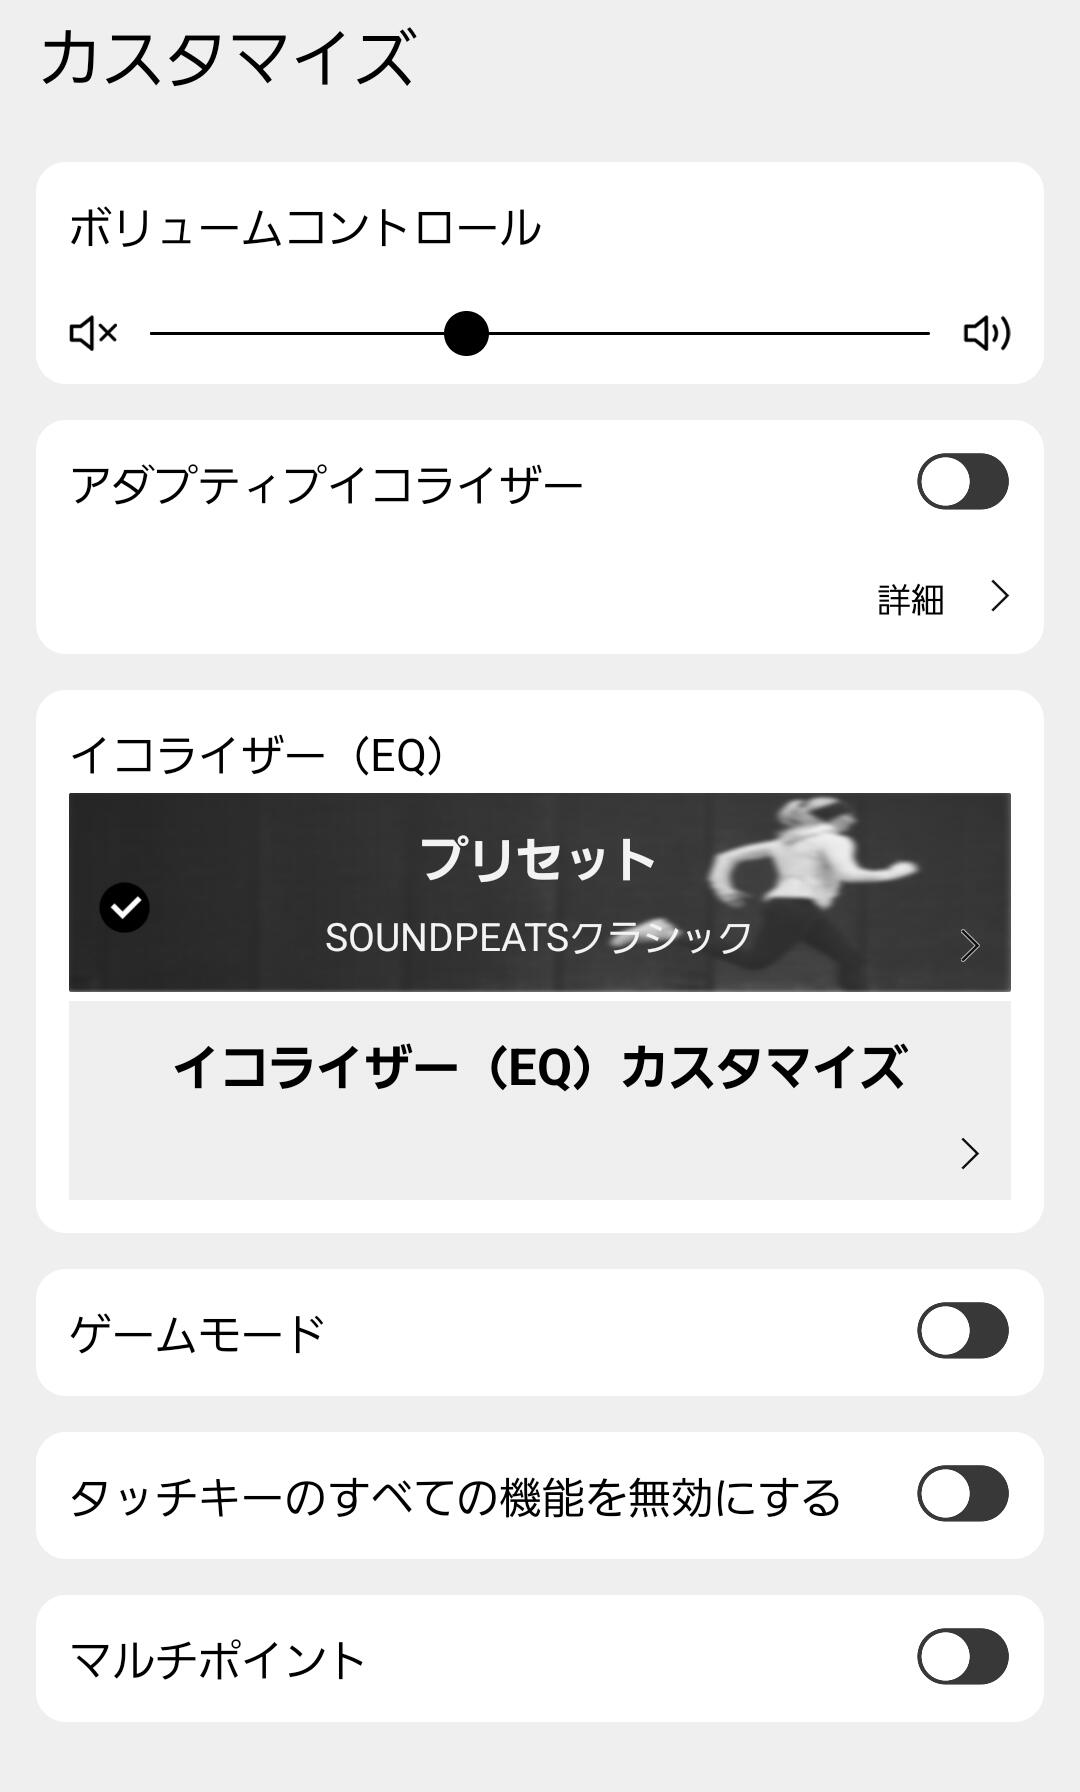 SOUNDPEATS GoFree2は専用アプリ『SOUNDPEATS』にて詳細設定が可能